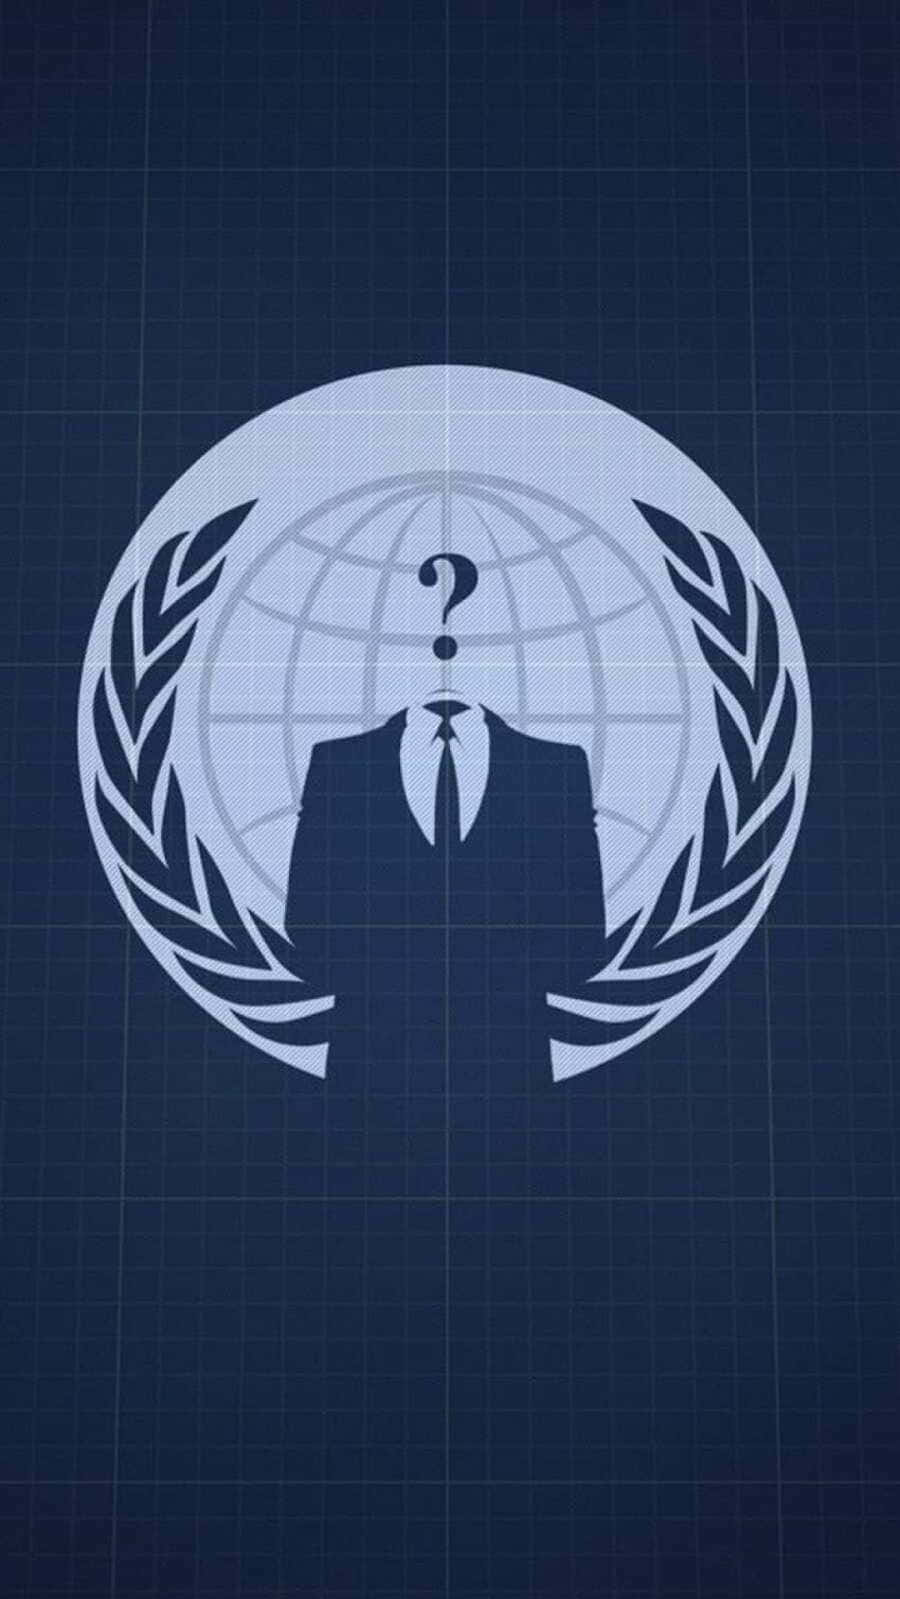 Anonymous Hacker Emblem Background